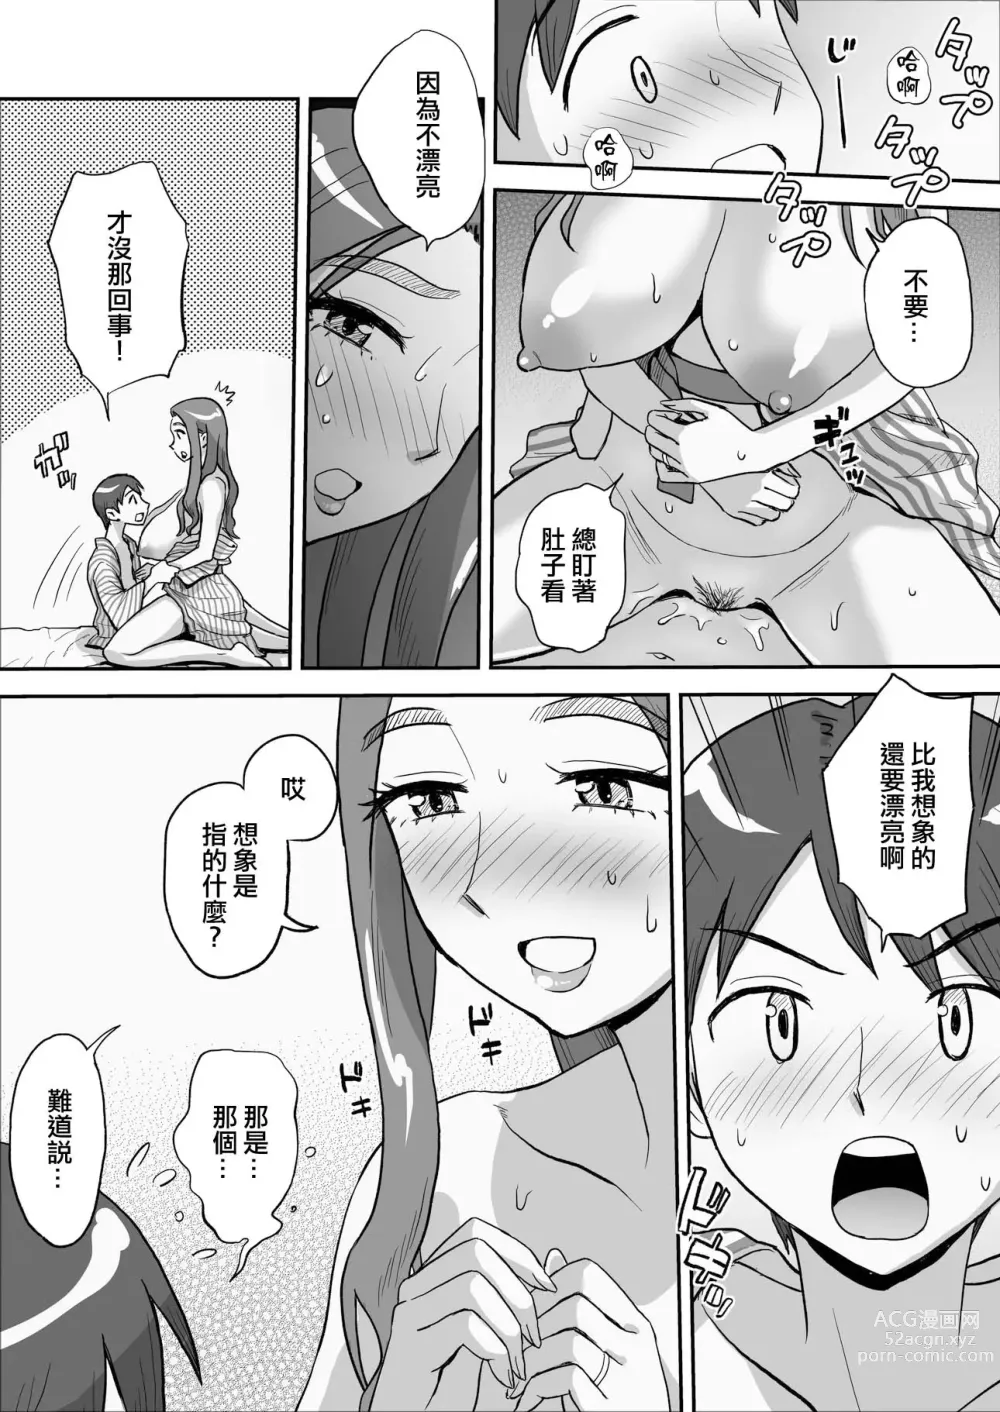 Page 42 of doujinshi 僅此一天的媽媽 這是隻屬於我們...兩人的秘密...哦?....